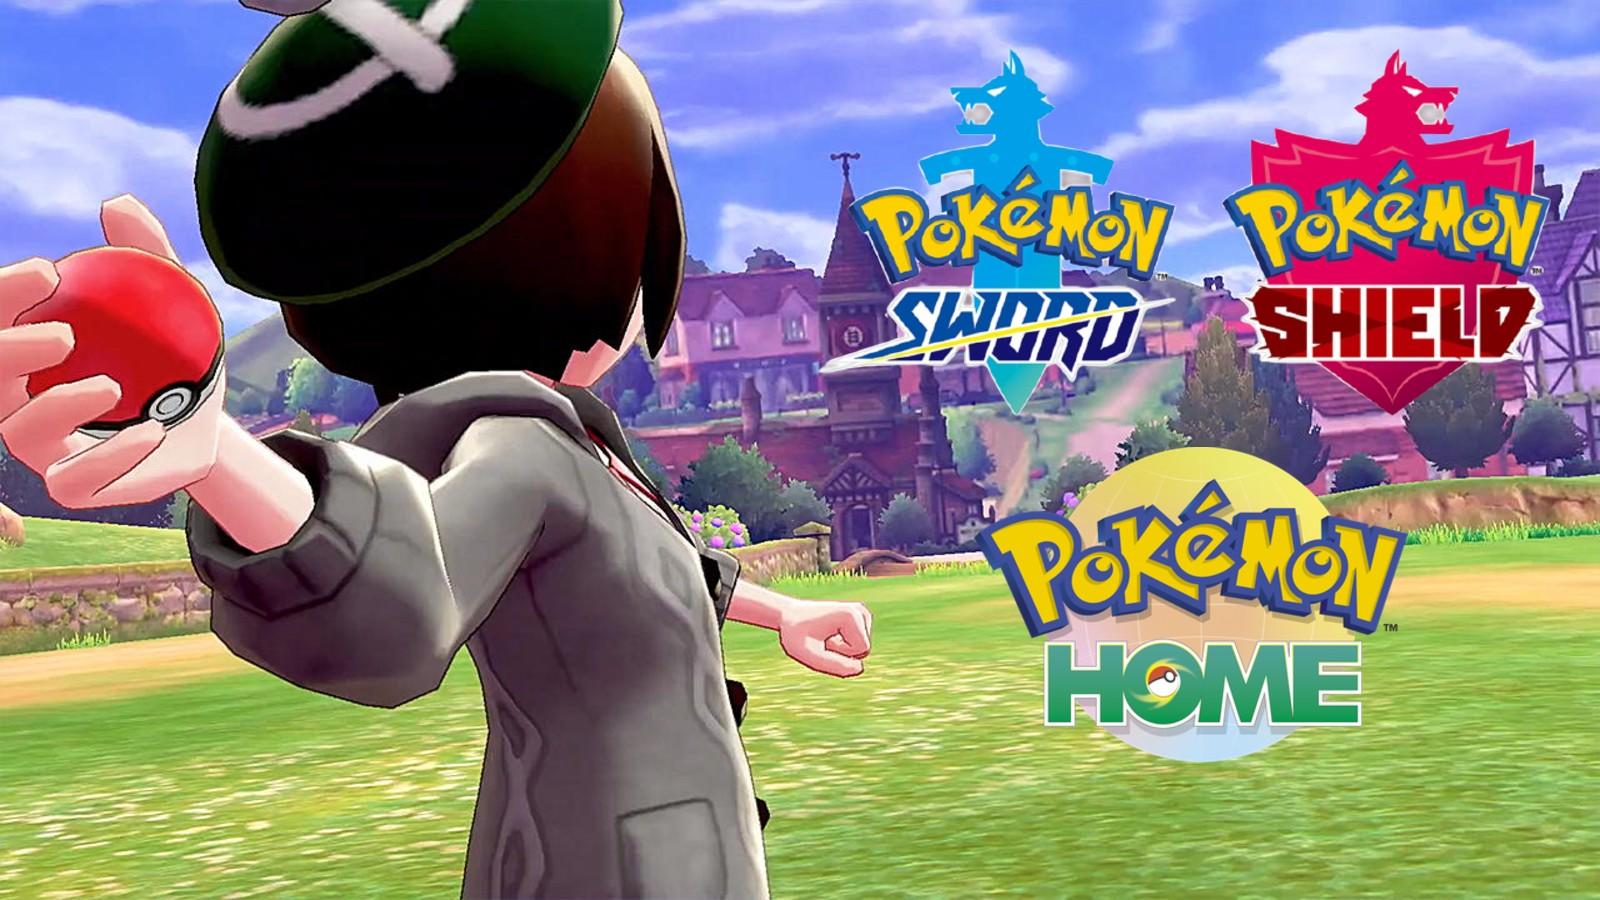 Pokemon Home/ Sword & Shield